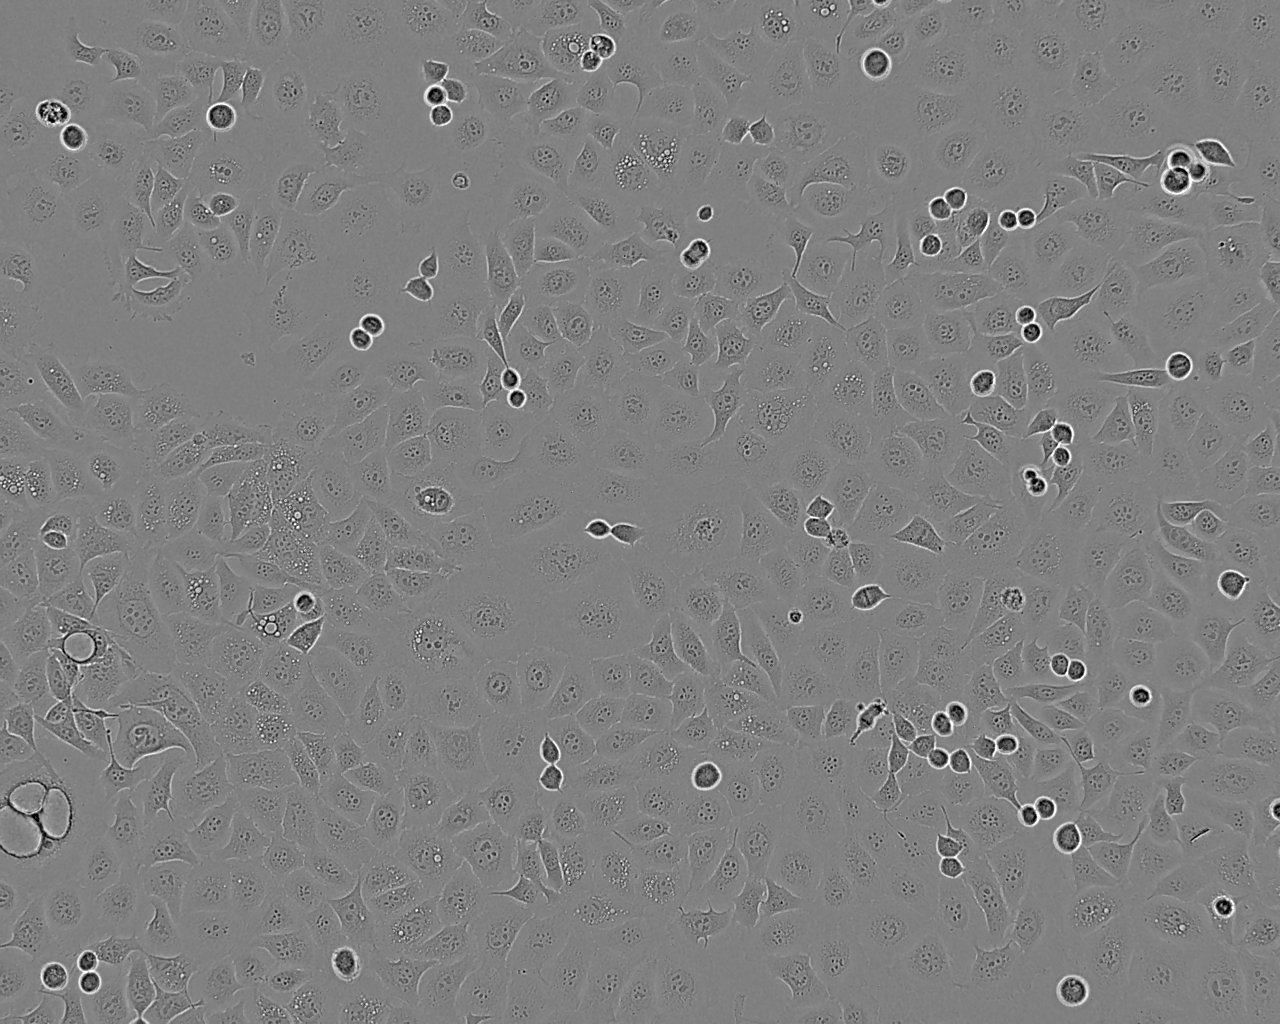 NCI-H920 Cells(赠送Str鉴定报告)|人肺癌细胞